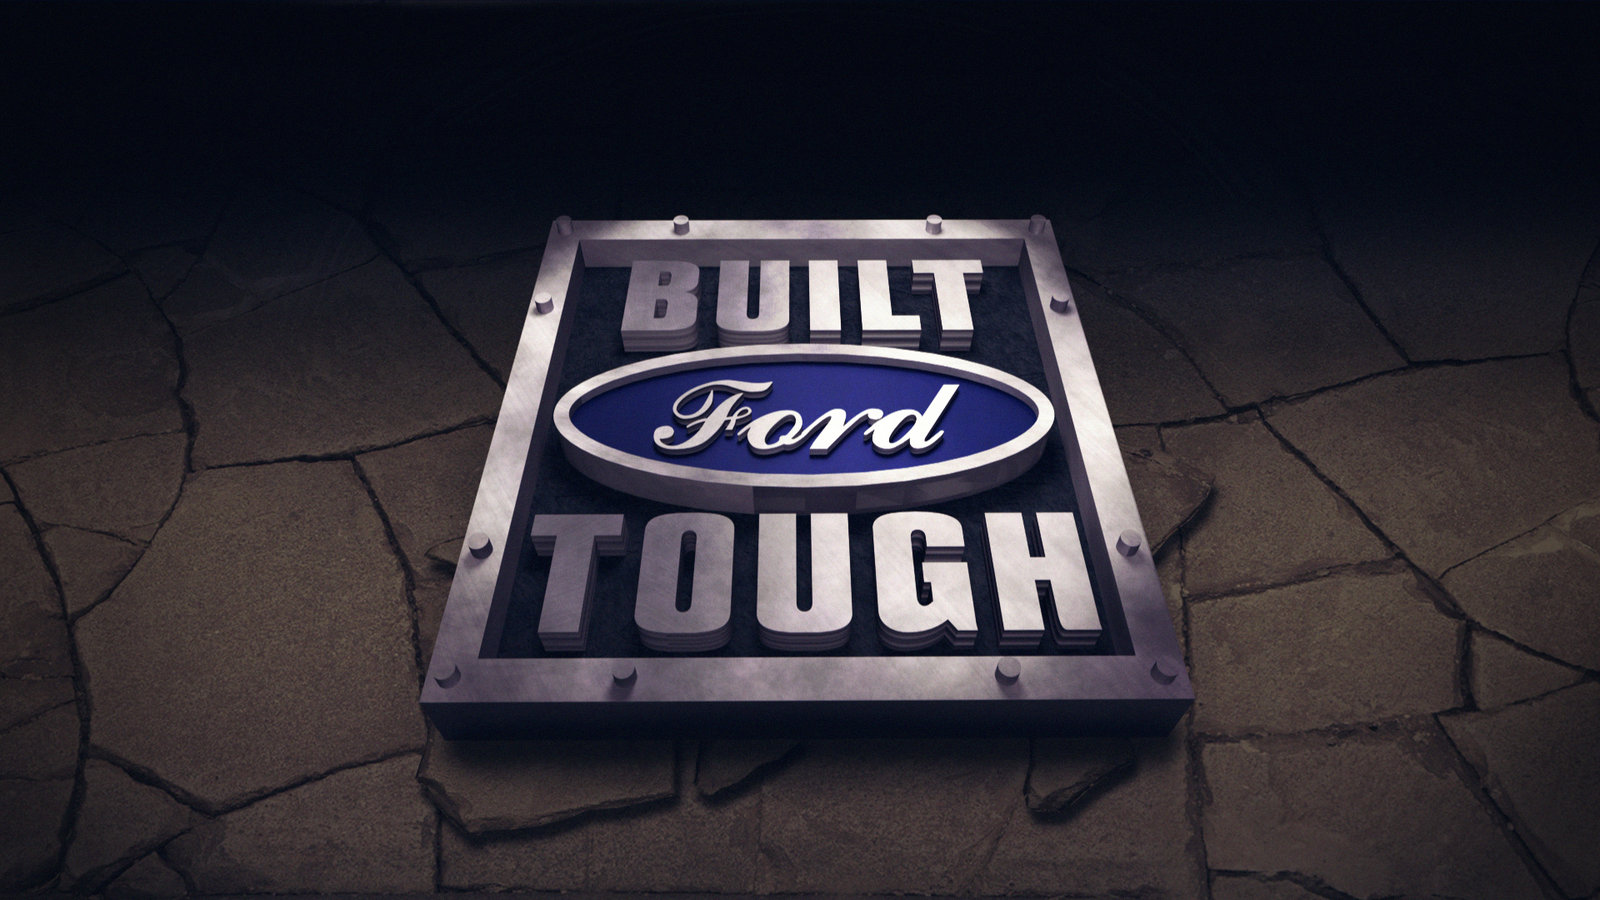 Built Ford Tough Wallpaper - image #143